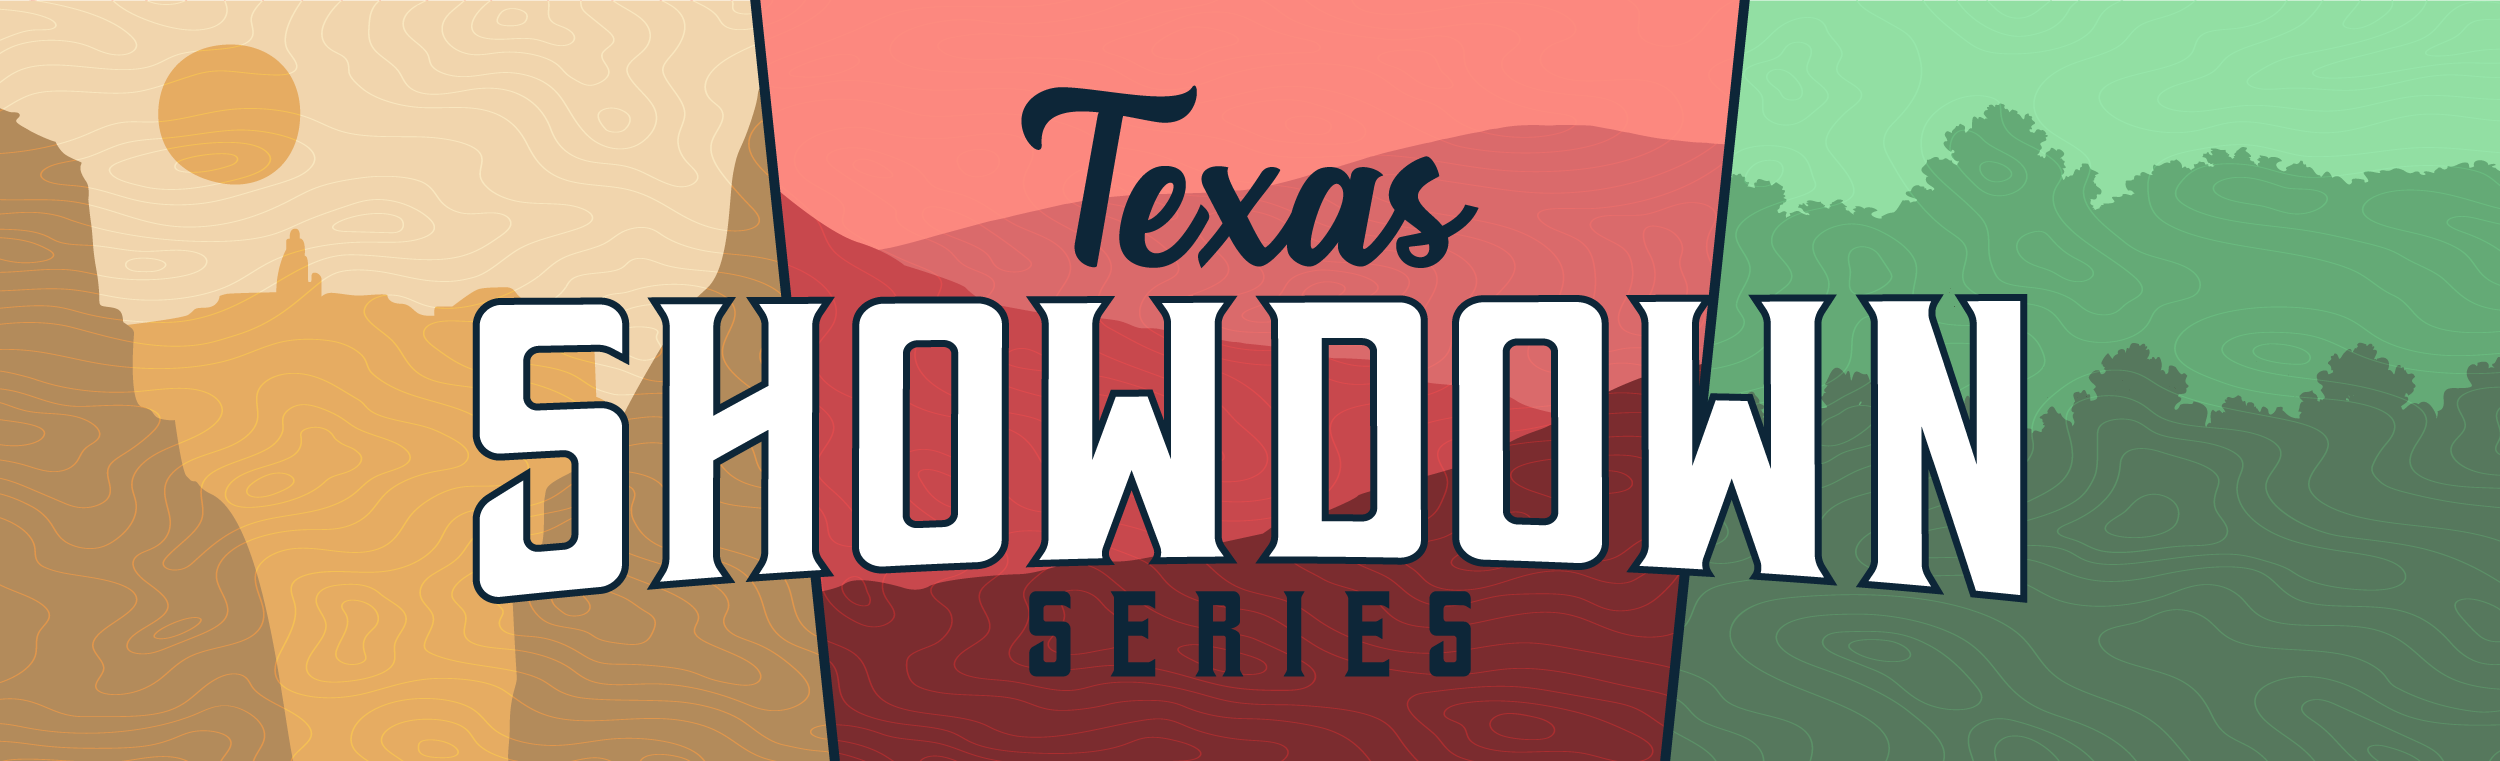 Texas Showdown Series - This is Texas Bikepacking 